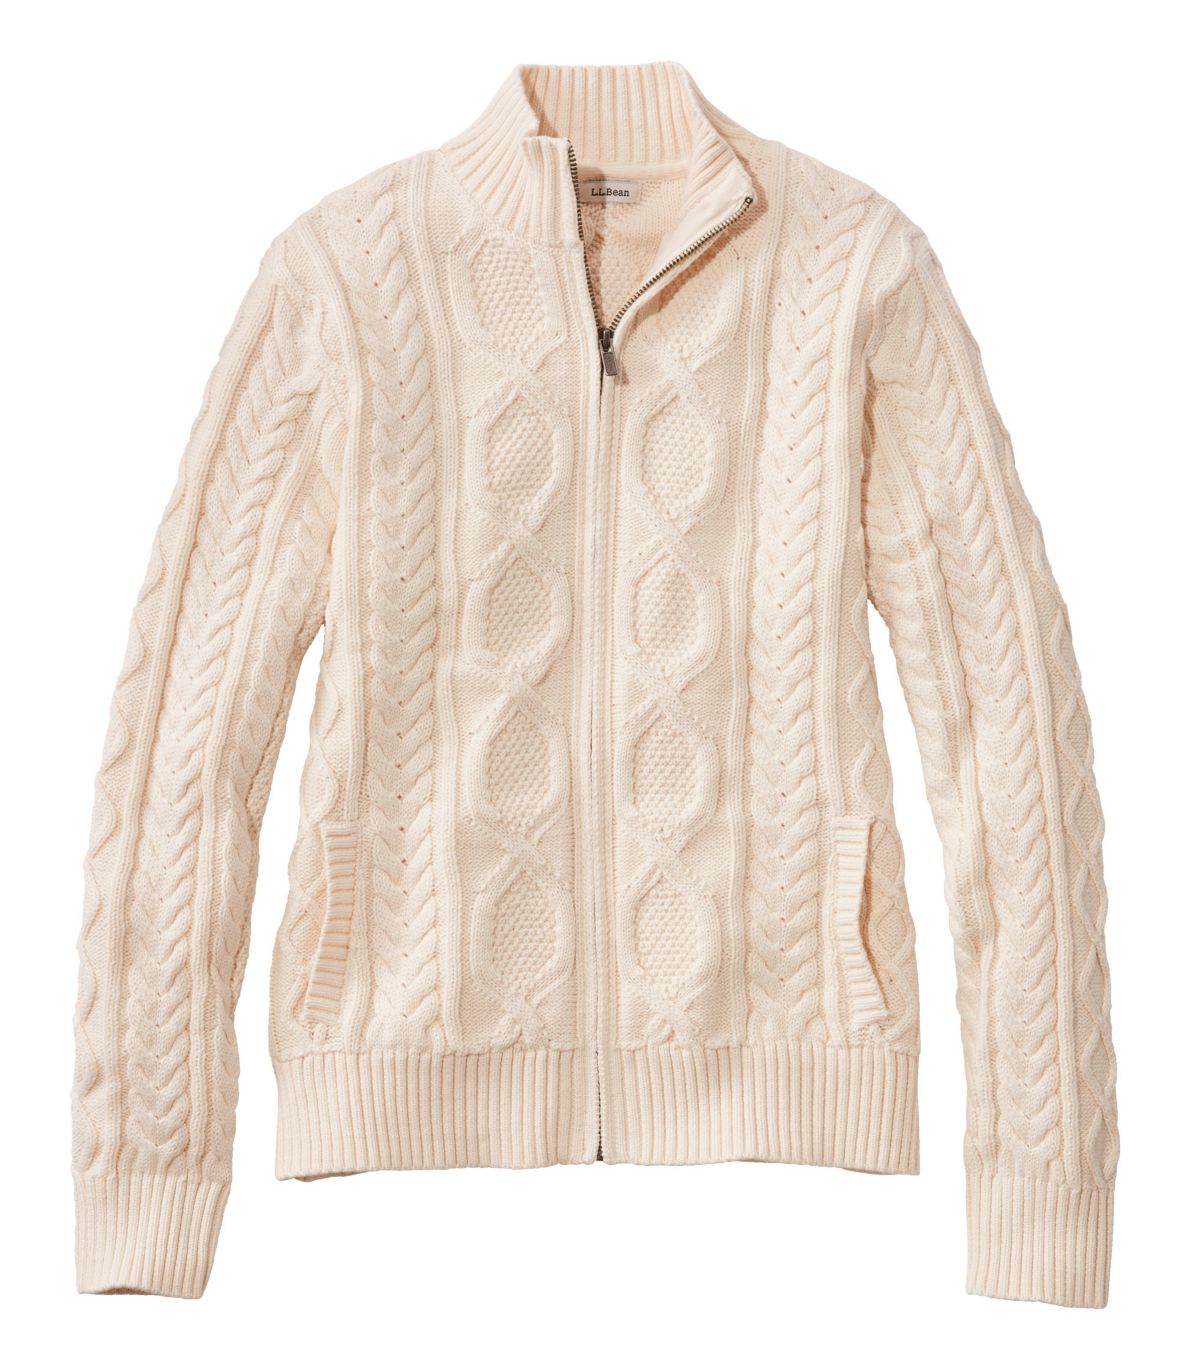 Women's Bean's Heritage Soft Cotton Fisherman Sweater, Cardigan